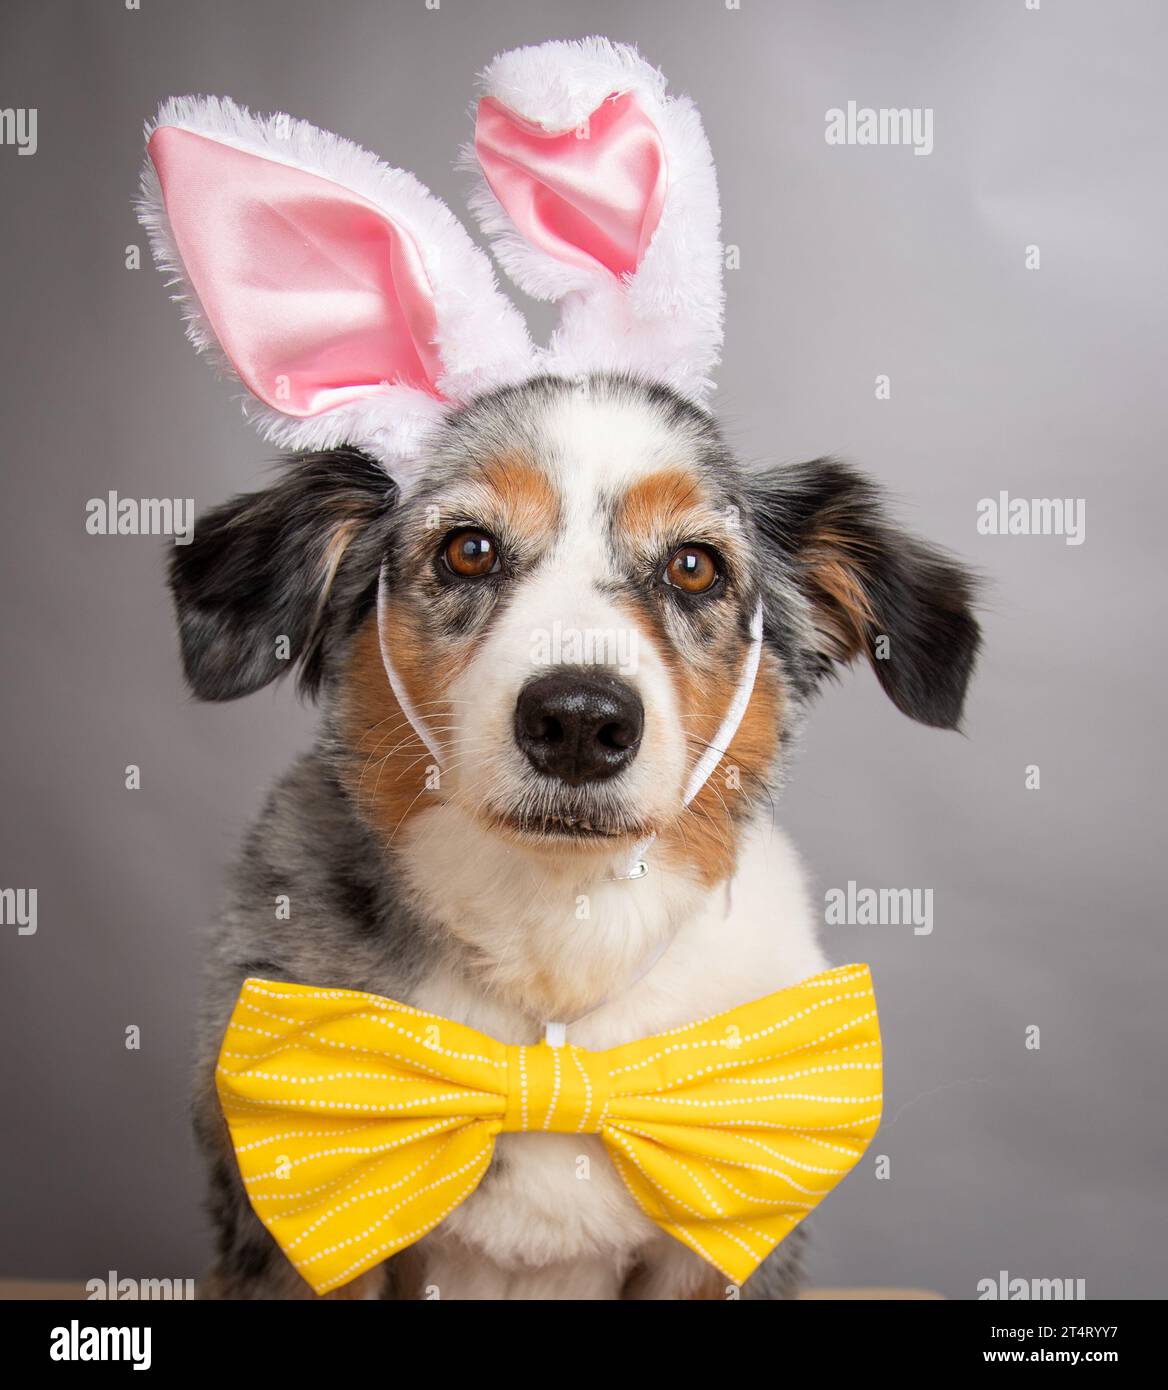 Portrait of a miniature Australian Shepherd wearing bunny ears and a bow tie Stock Photo